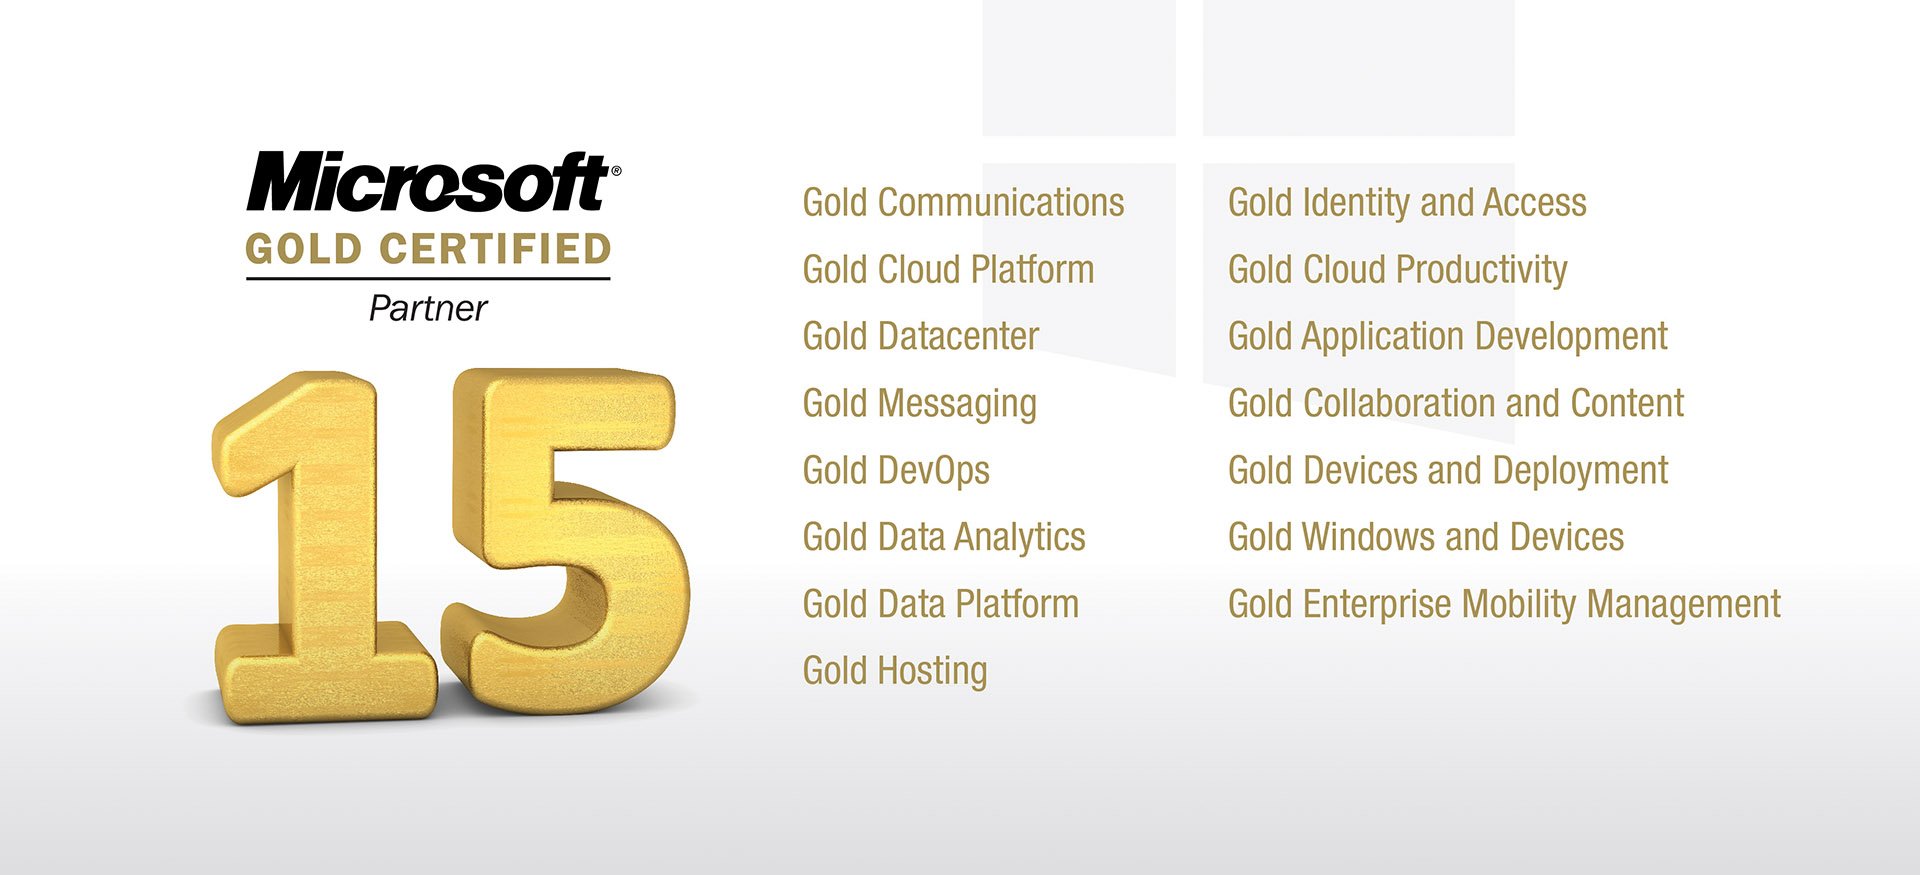 KiZAN Gold Competencies for Microsoft